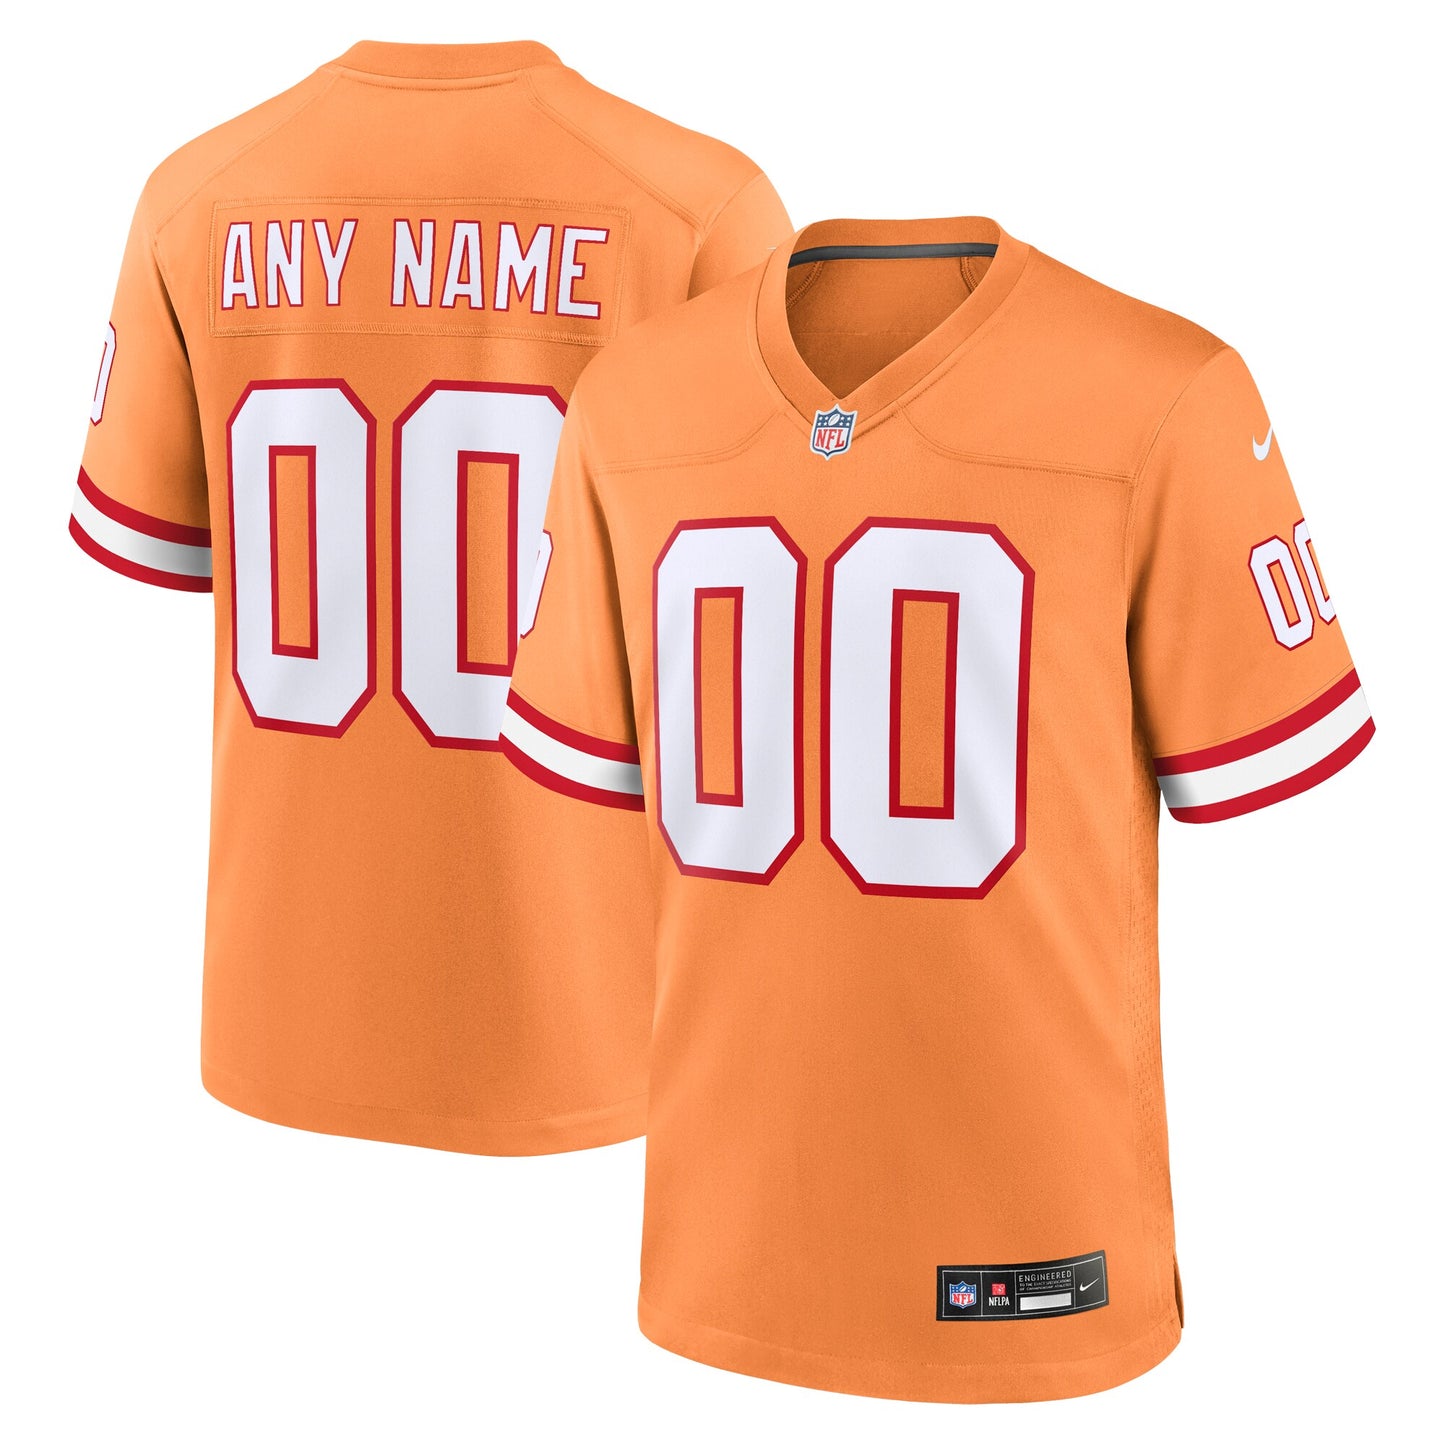 Tampa Bay Buccaneers Nike Custom Throwback Game Jersey - Orange